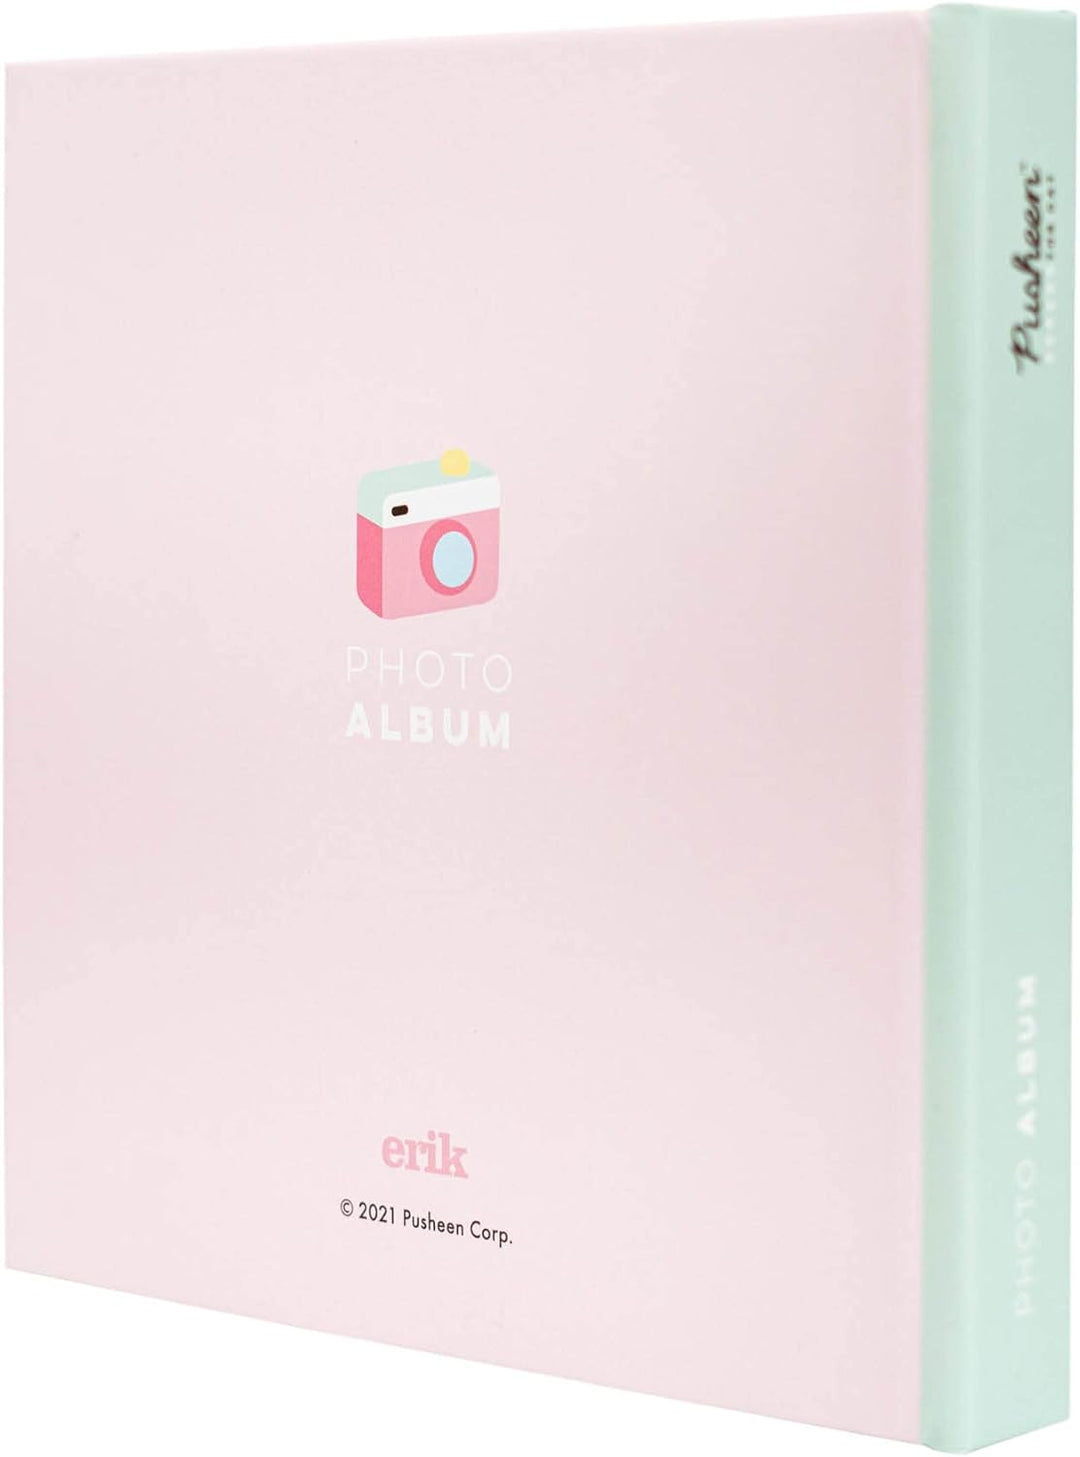 Official Pusheen Self-Adhesive Photo Album - 6.3 x 6.3 inch / 16 x 16 cm / Photo Books For Memories